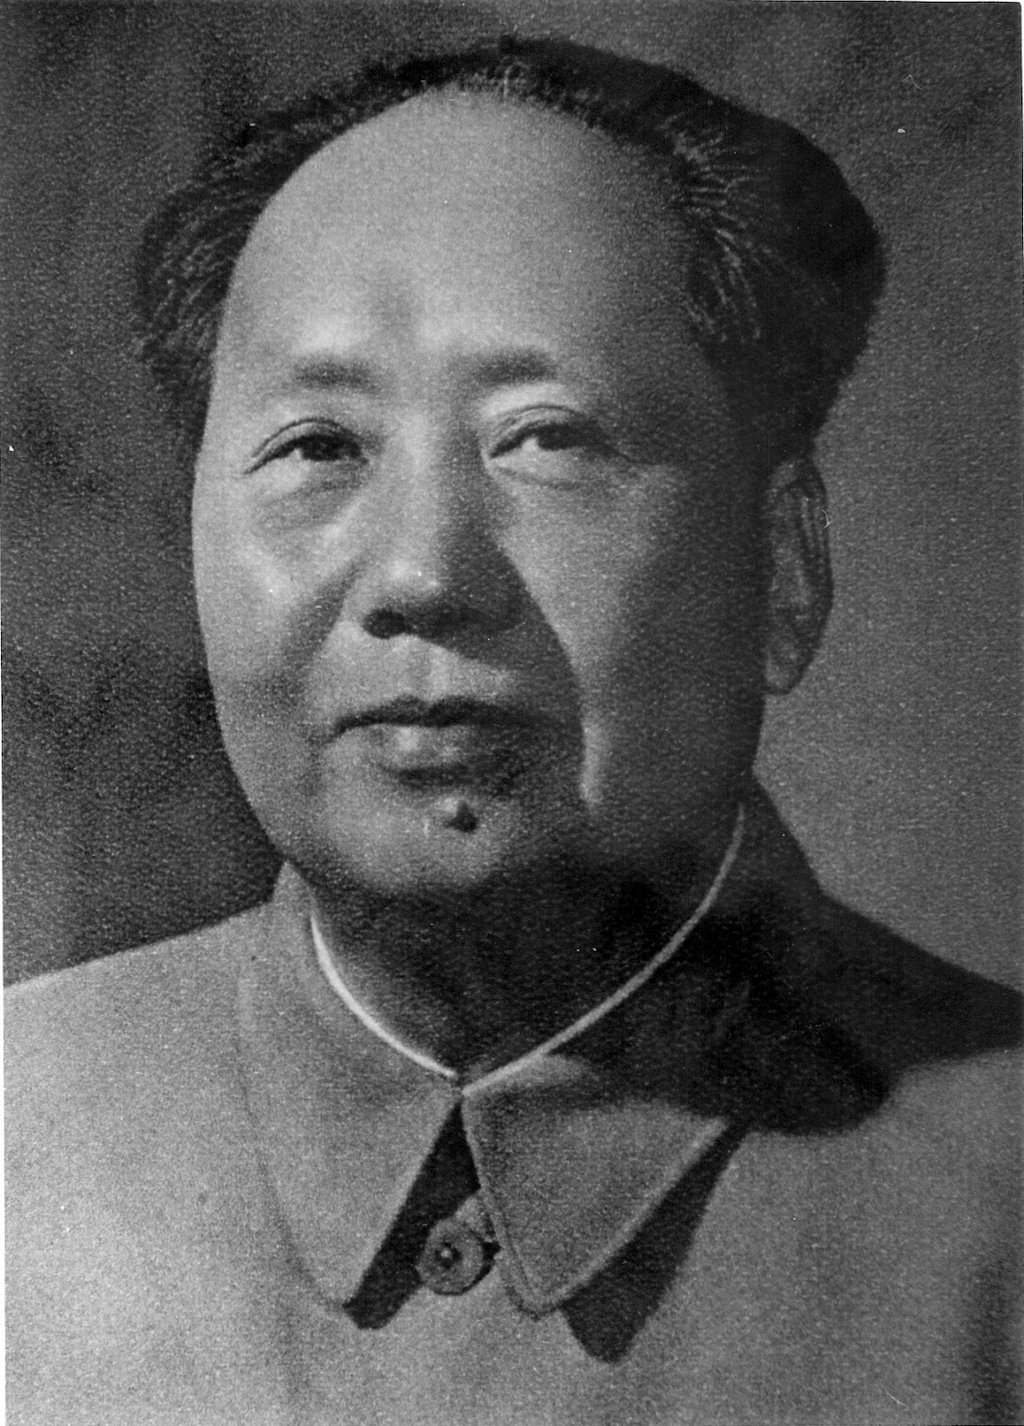 Mao Zedong Portrait By Shitalloverhumanity